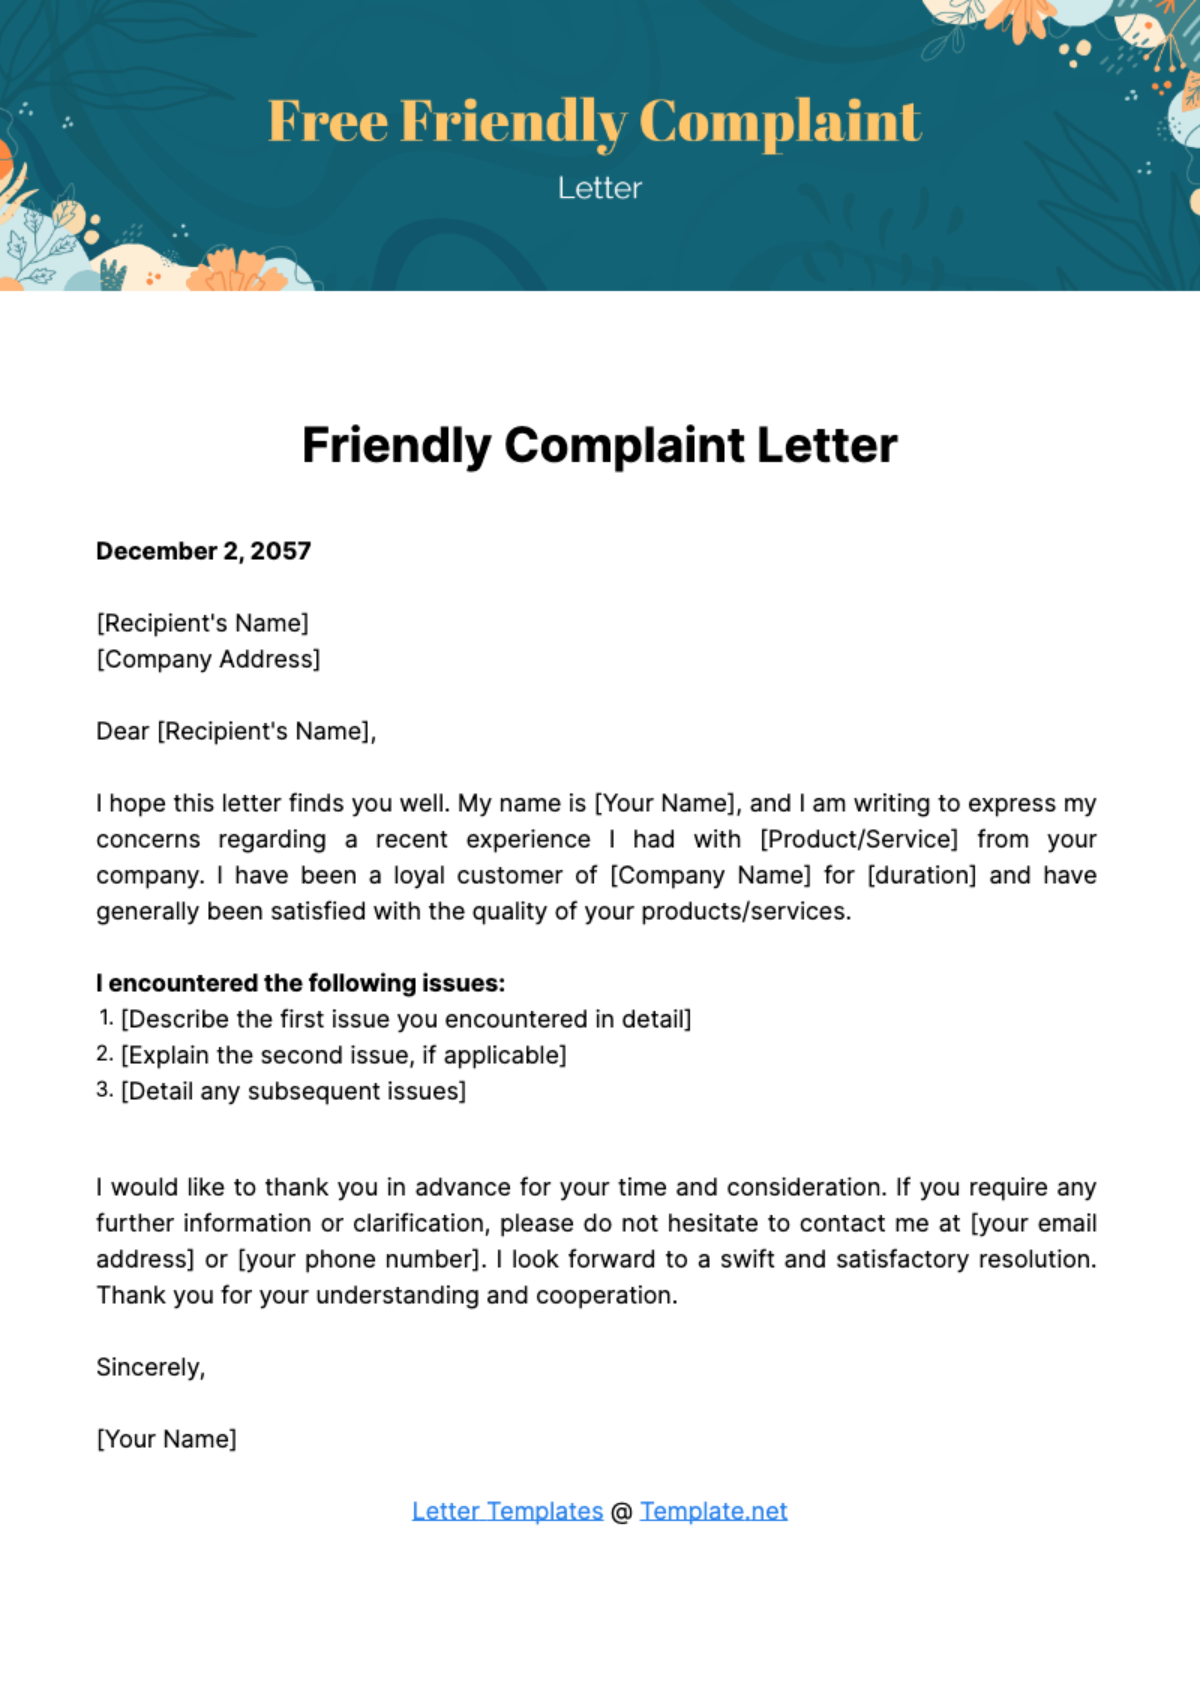 Free Friendly Complaint Letter Template